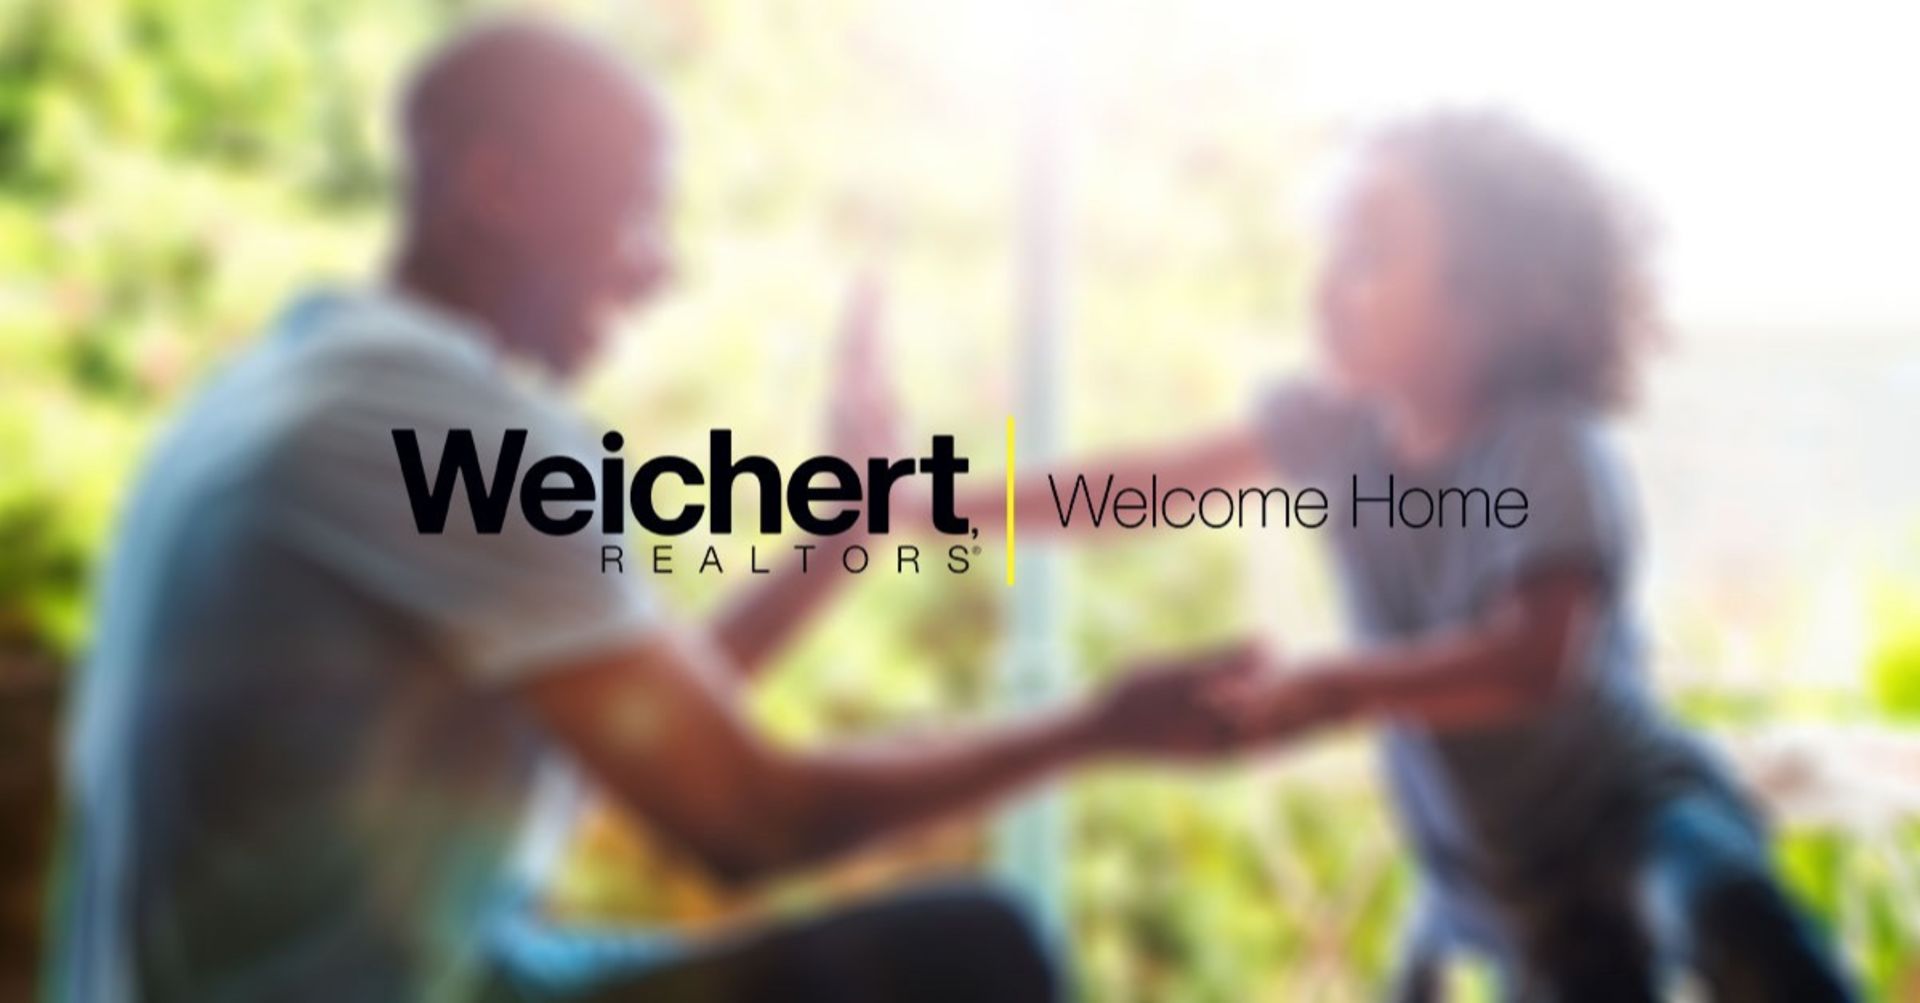 We'll help open the door to your future home | weichertree.com | Weichert Realtors® Real Estate Express - We'll help open the door to your future home